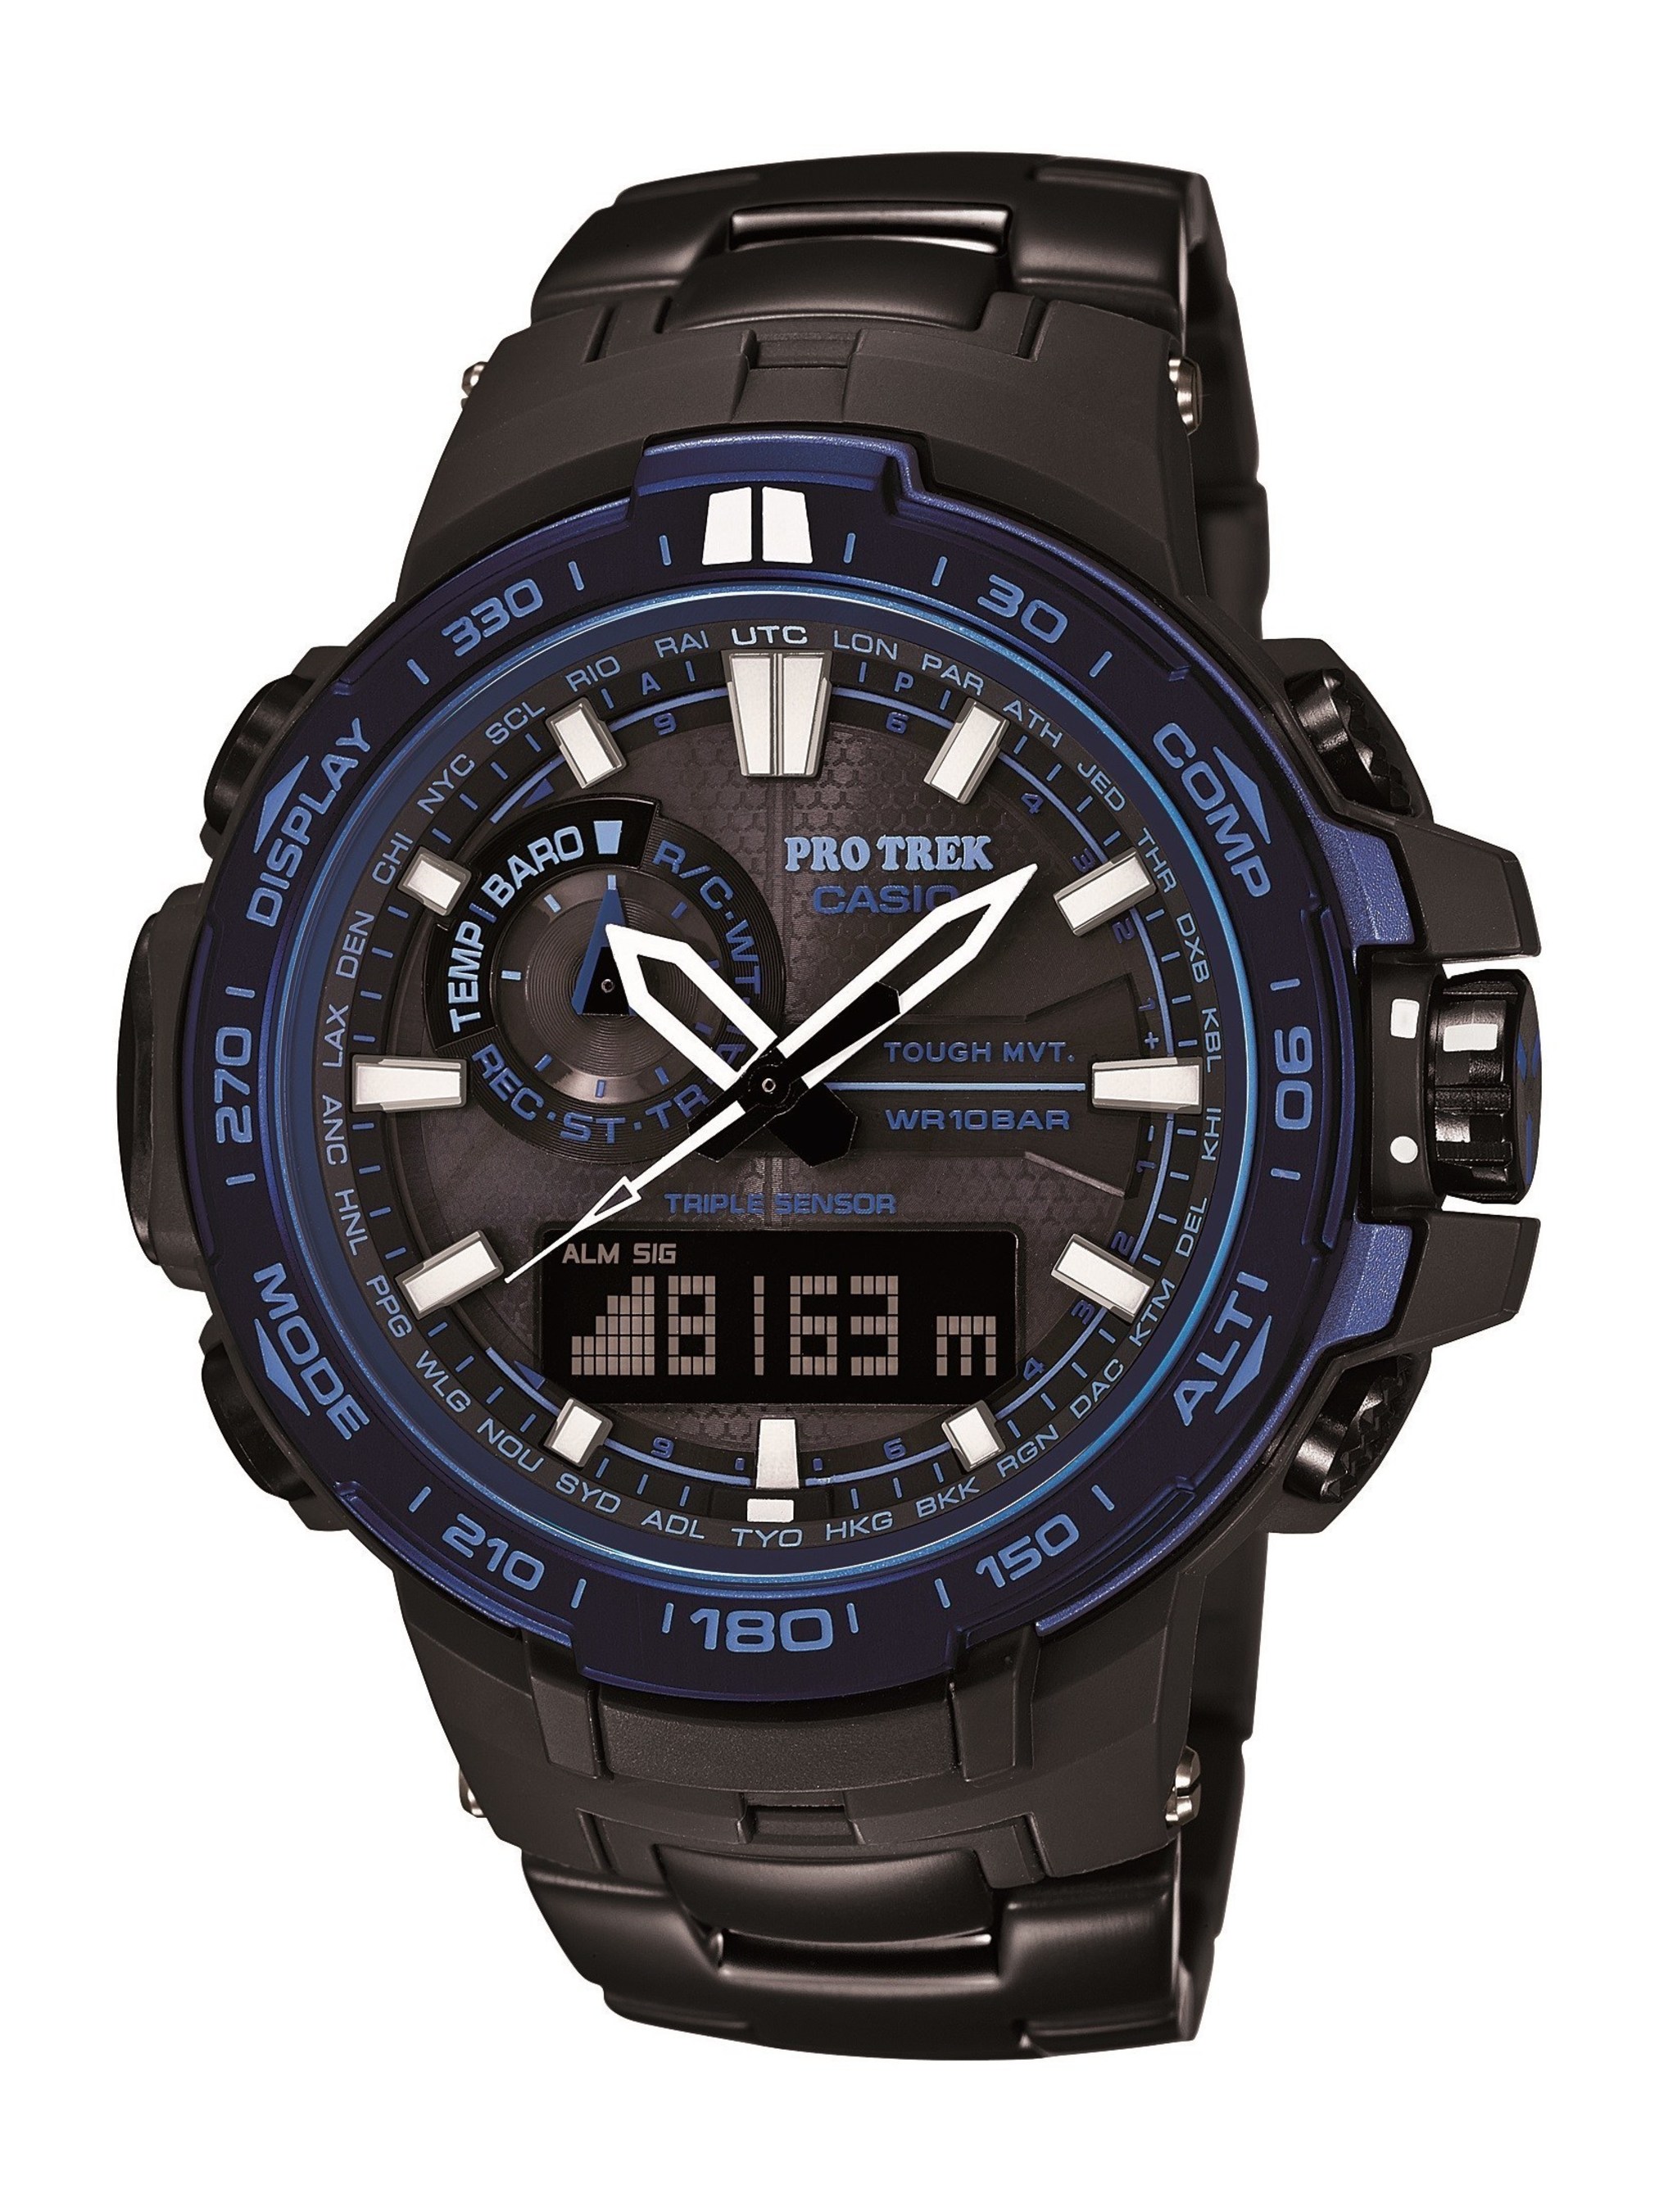 Casio Introduces Sleek, New Pro Trek Timepiece